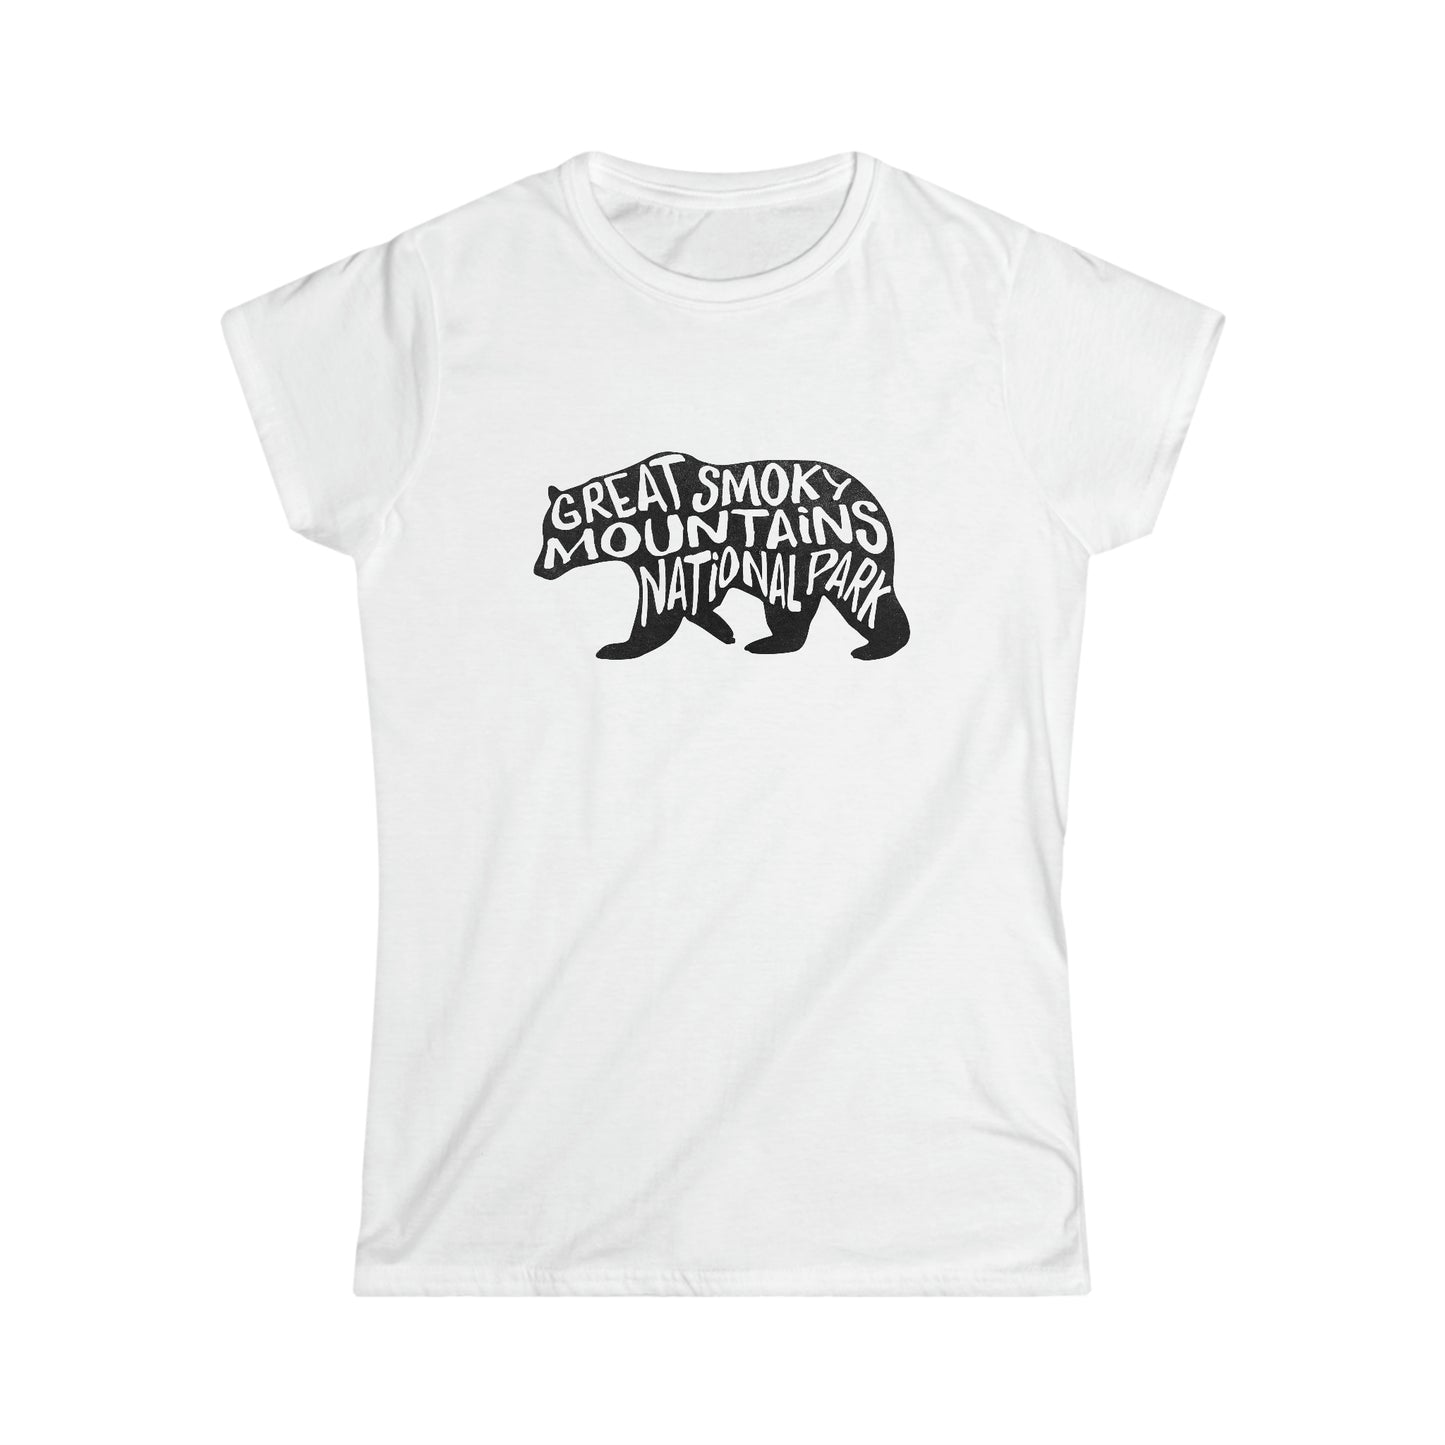 Great Smoky Mountains National Park Women's T-Shirt - Black Bear